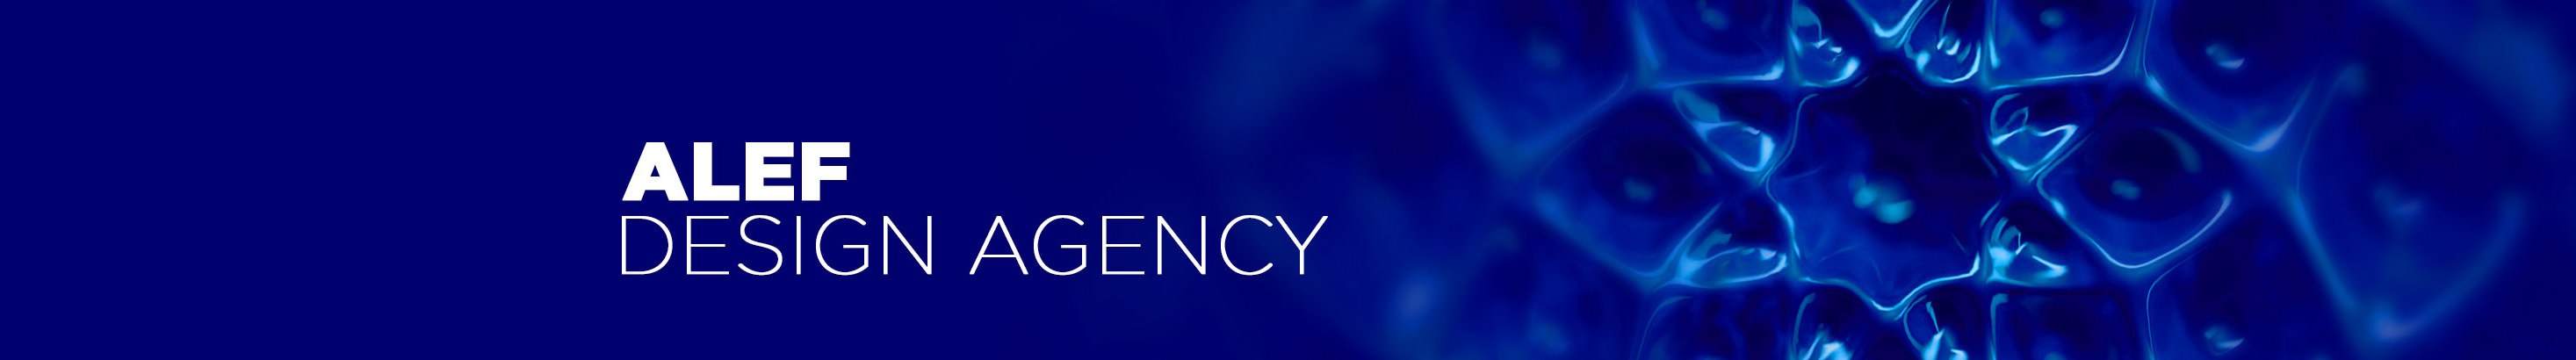 Alef Design Agency's profile banner